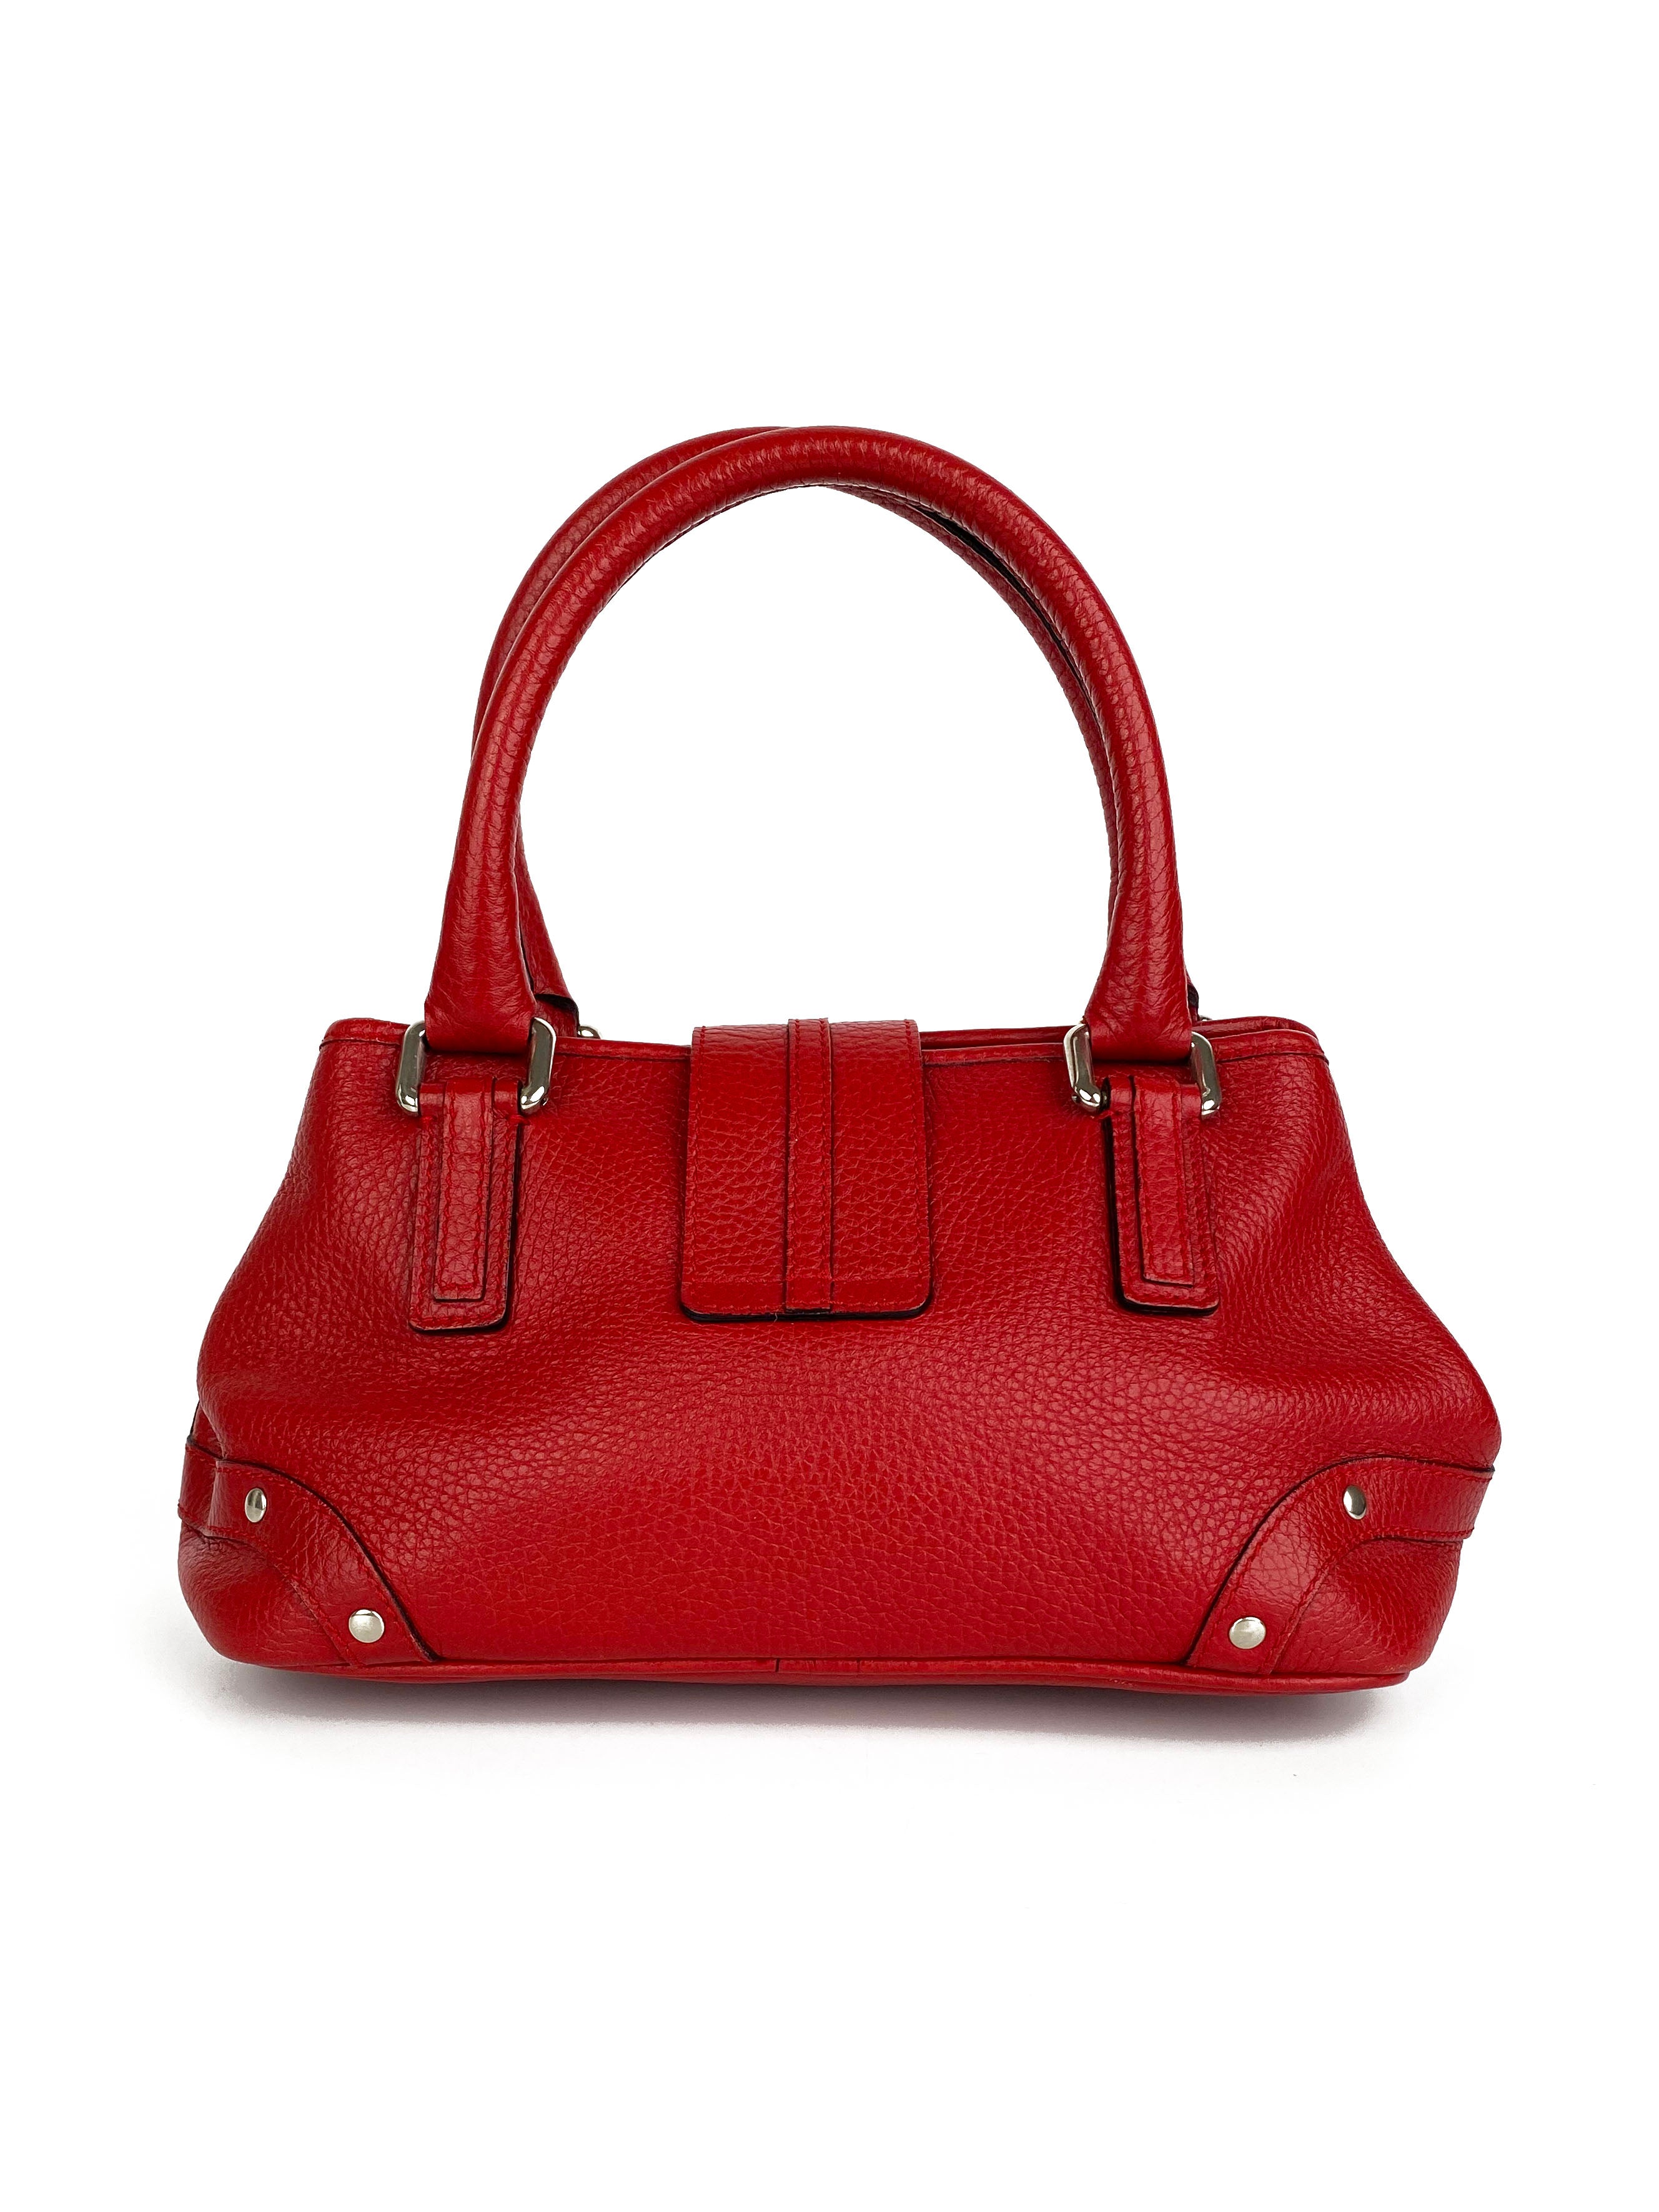 burberry-small-red-bag-12.jpg